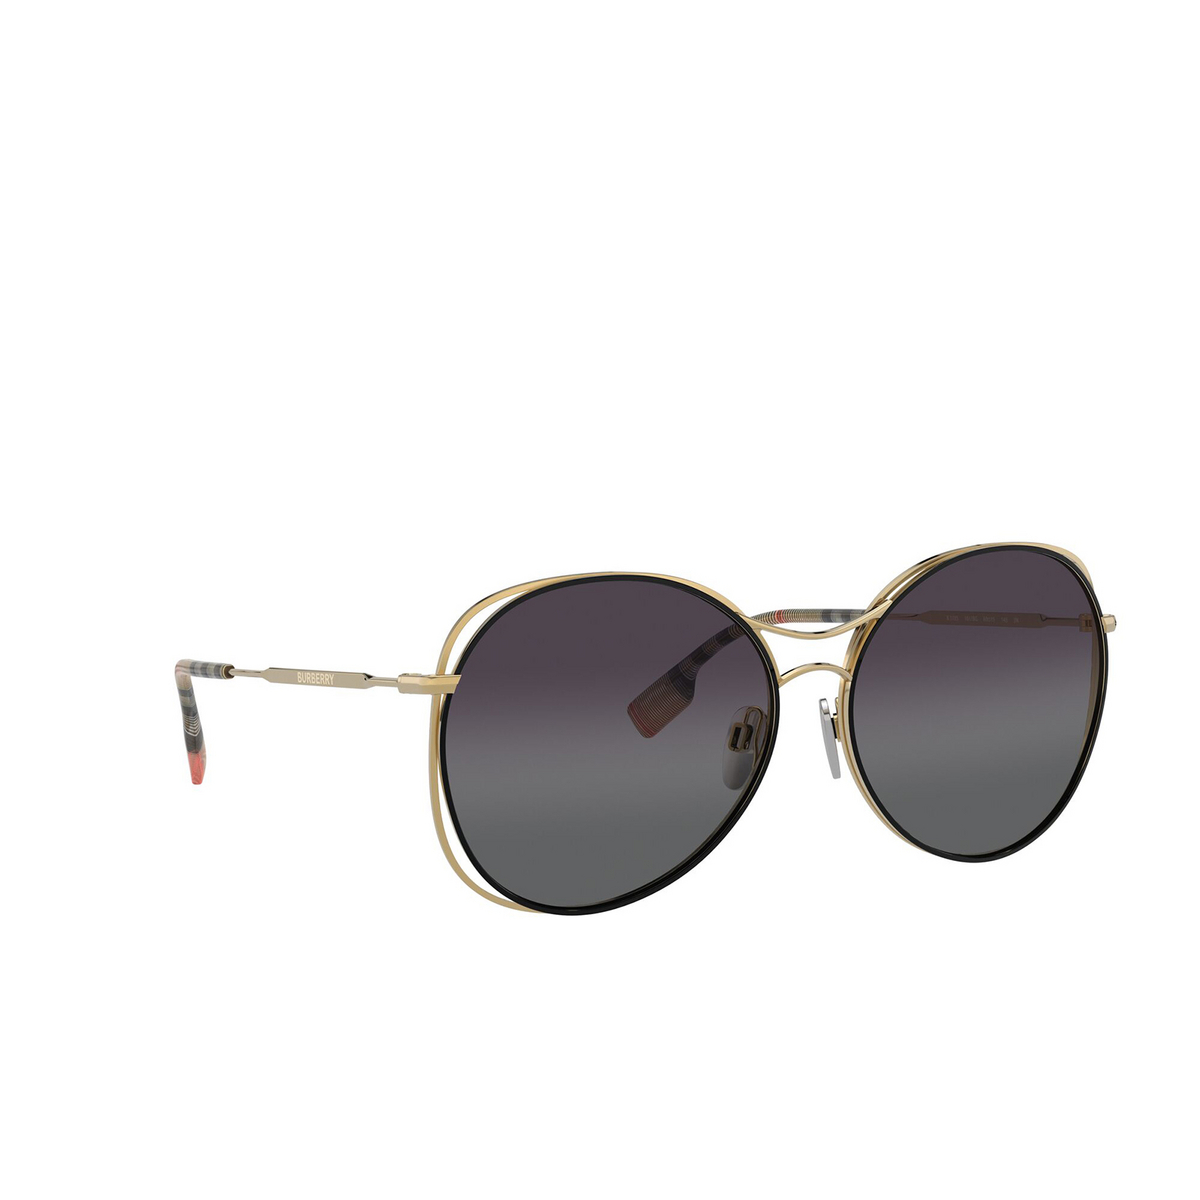 Burberry® Round Sunglasses: BE3105 color Gold / Black 10178G - three-quarters view.